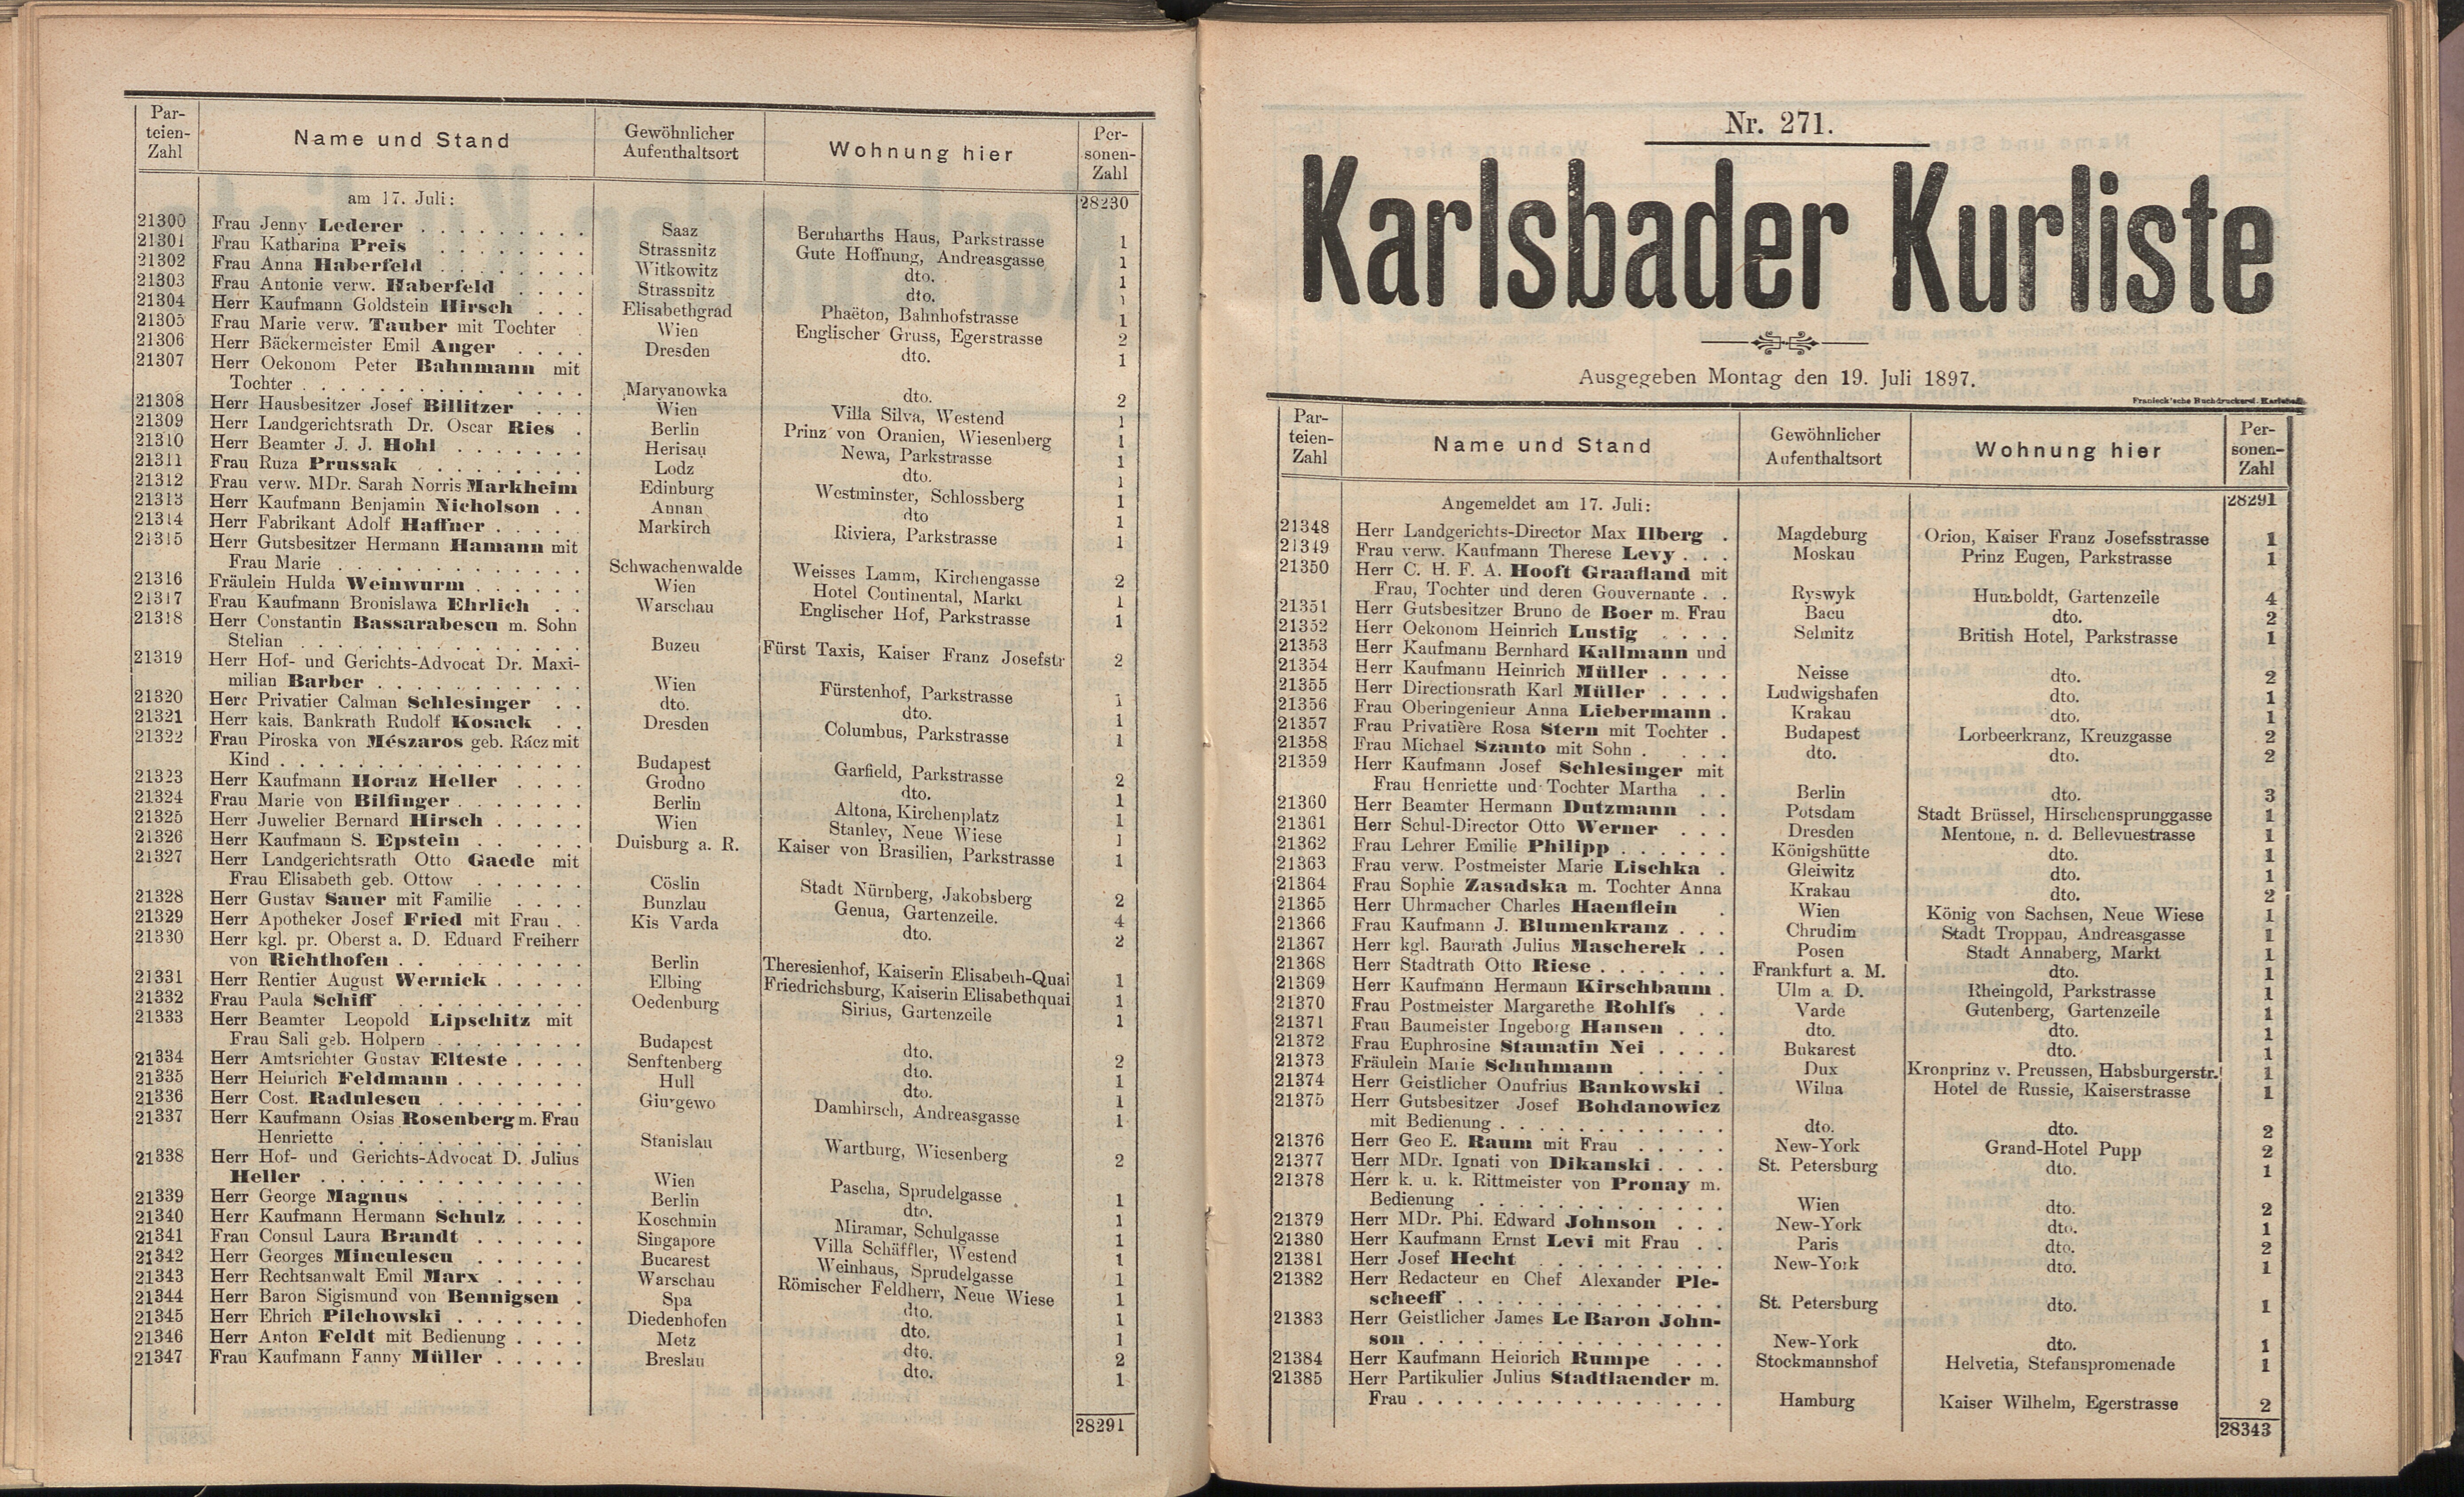 290. soap-kv_knihovna_karlsbader-kurliste-1897_2910